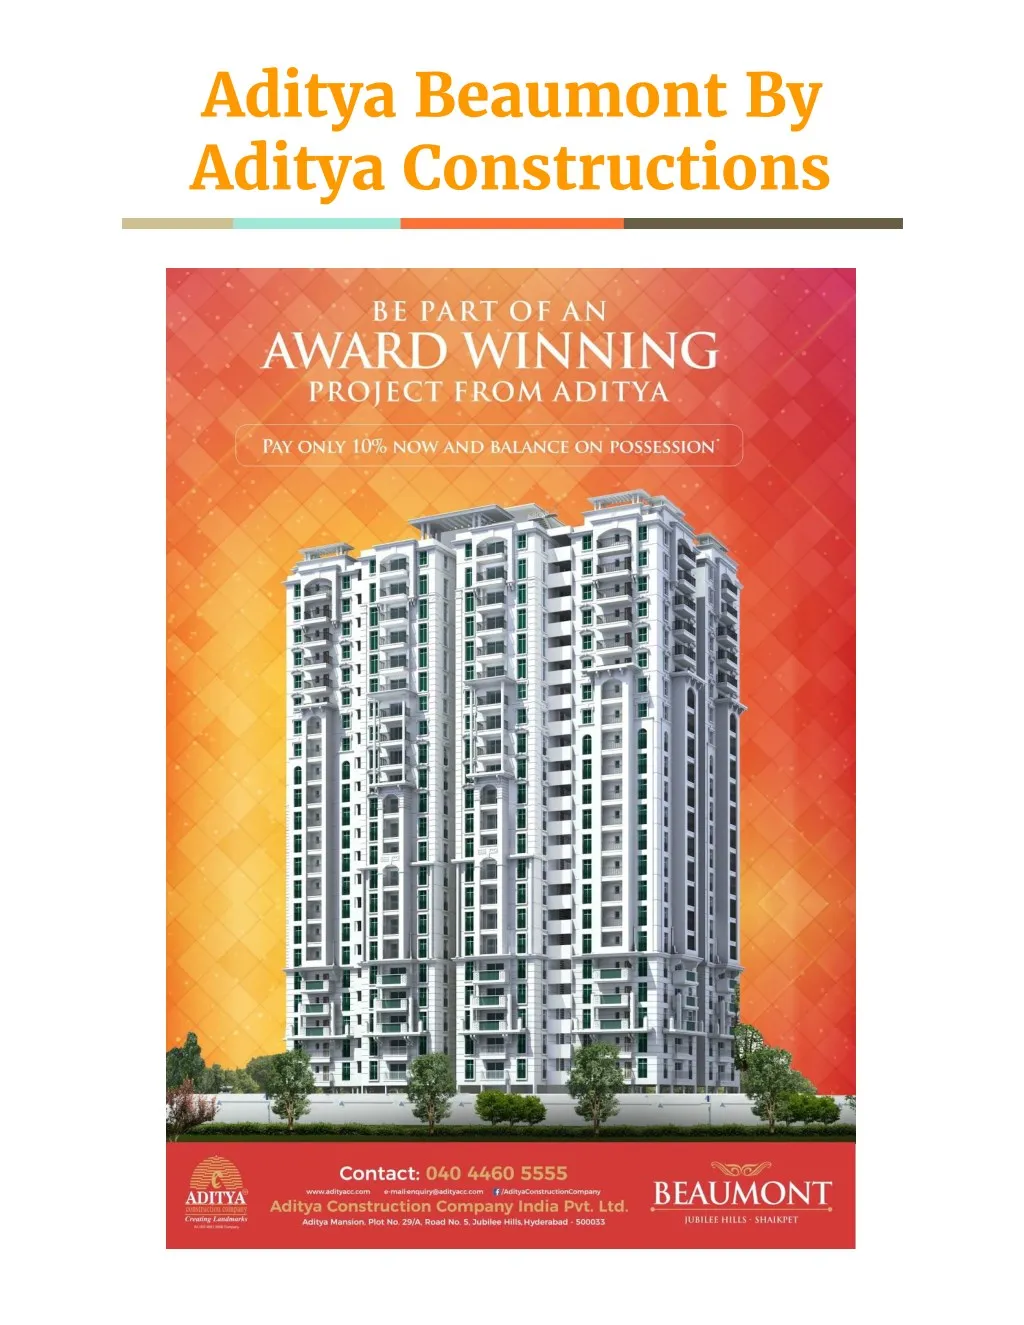 aditya beaumont by aditya constructions